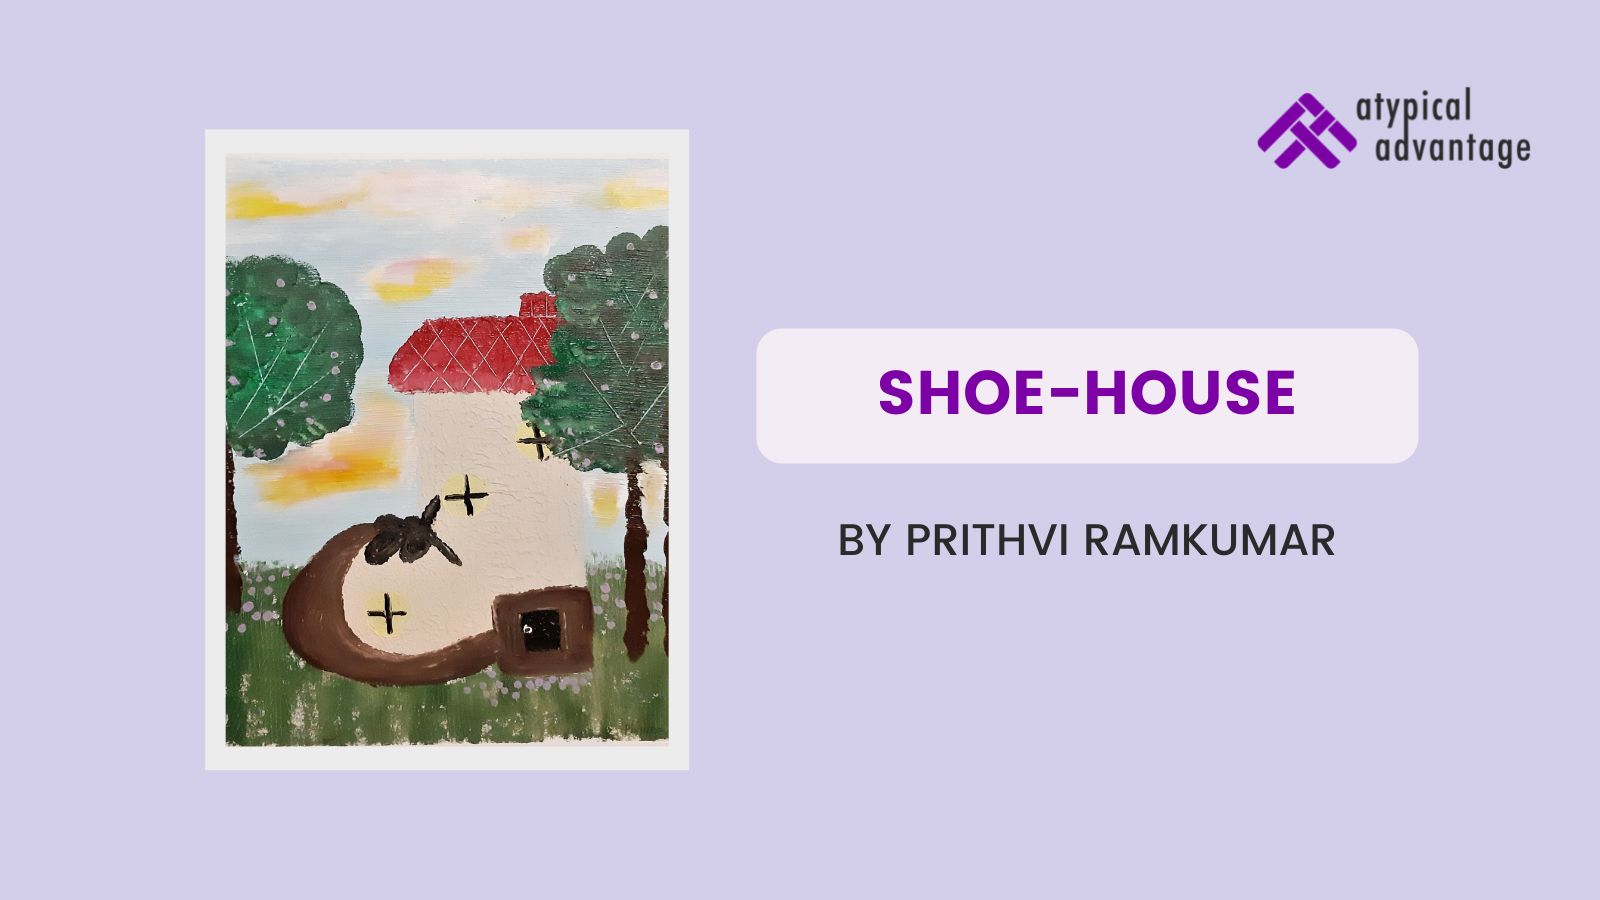 Shoe-house by Prithvi Ramkumar